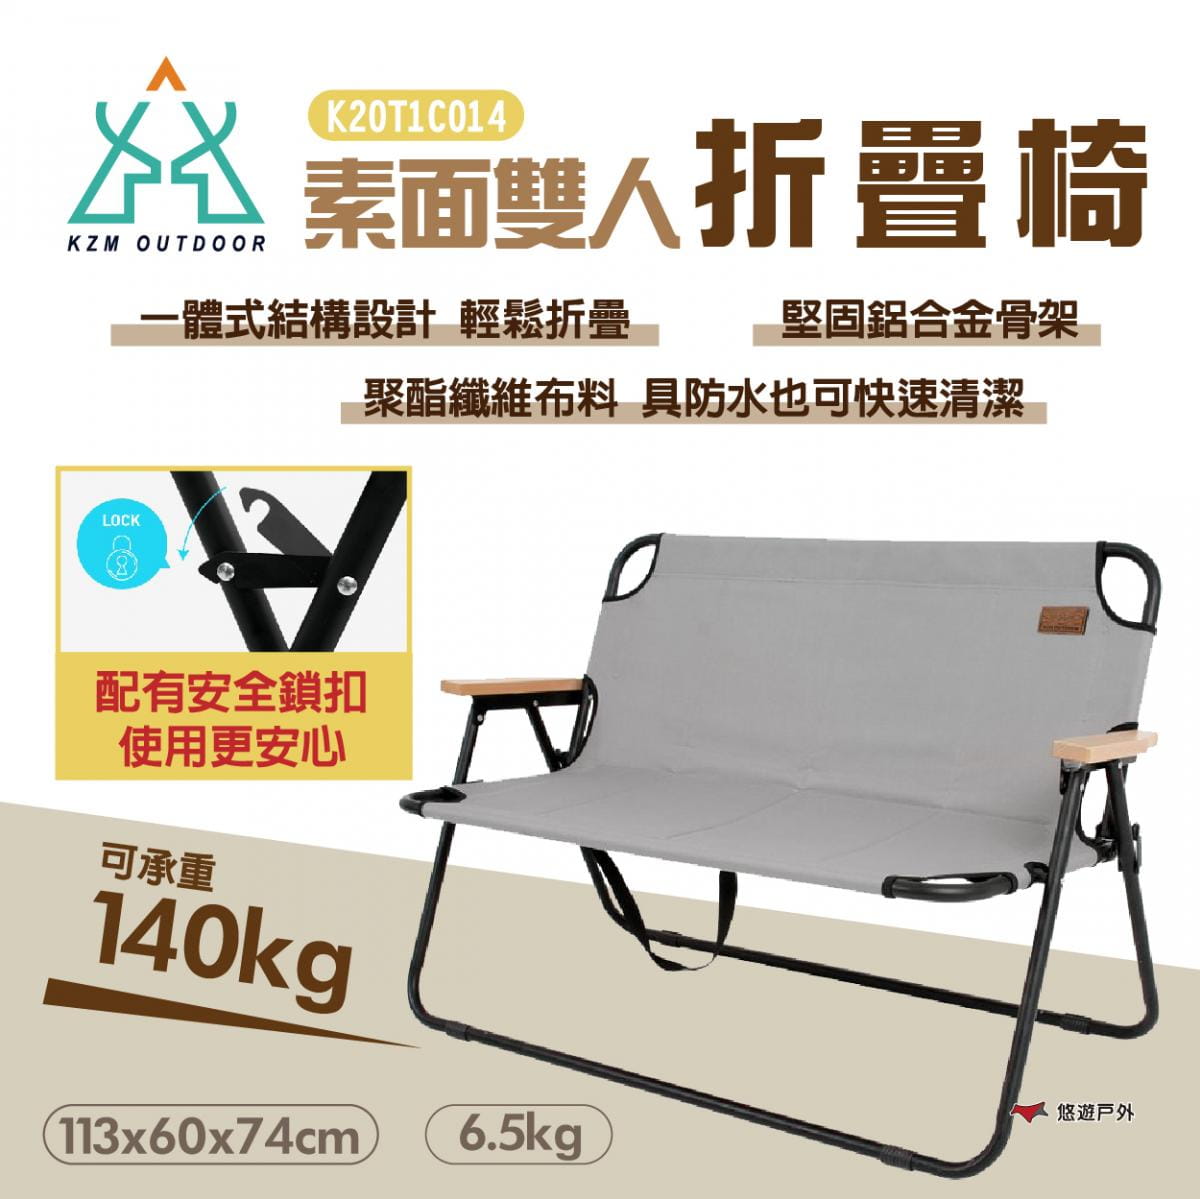 【KZM】素面雙人折疊椅_K20T1C014 (悠遊戶外) 1